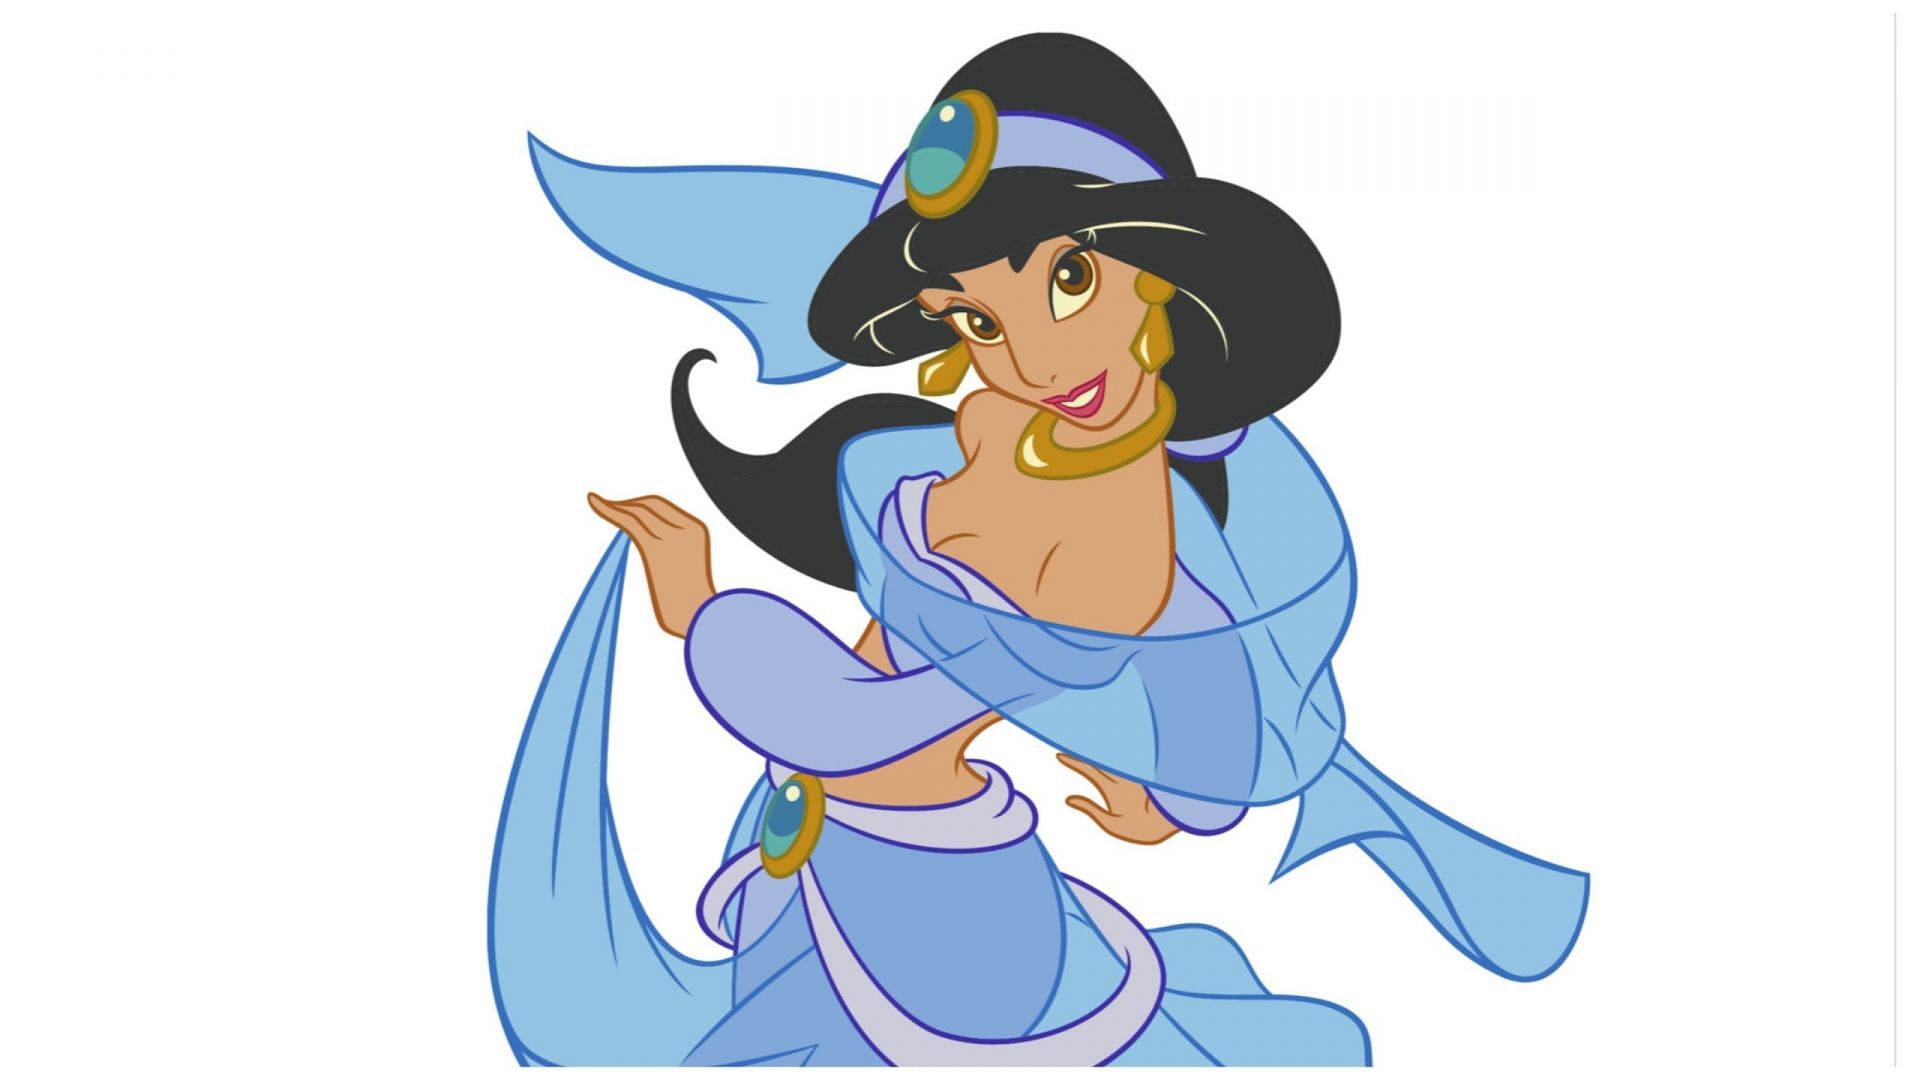 Princess Jasmine also appears on the list of disney princess mental disorders. (Image via Vecteezy/ Muza DS)